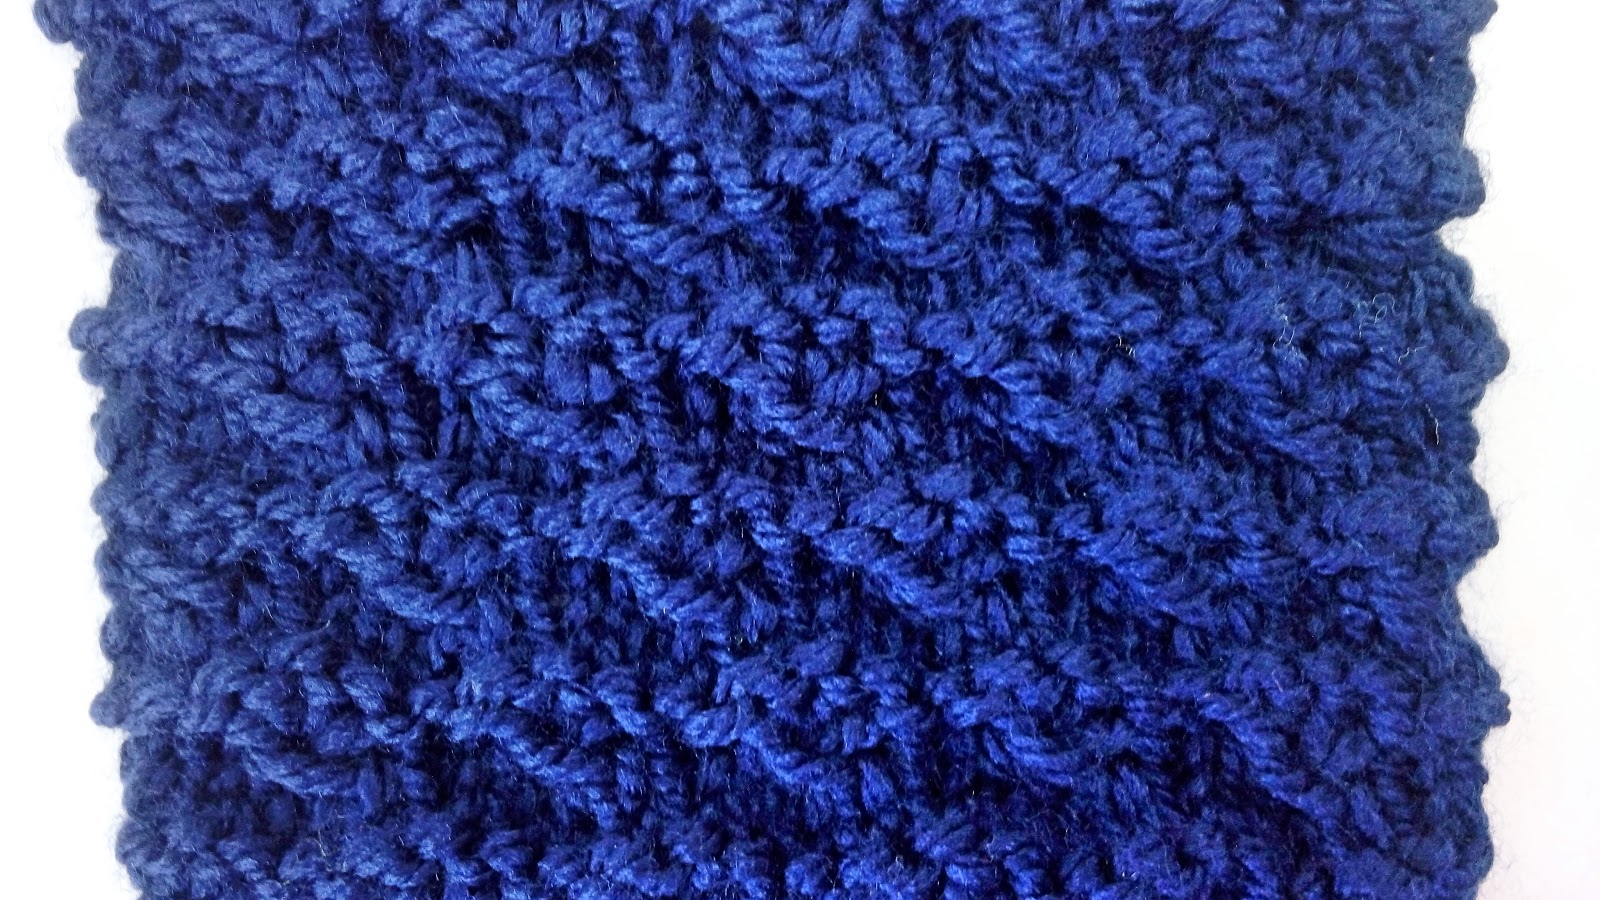 Tiny Bouquets - Knitting Stitch